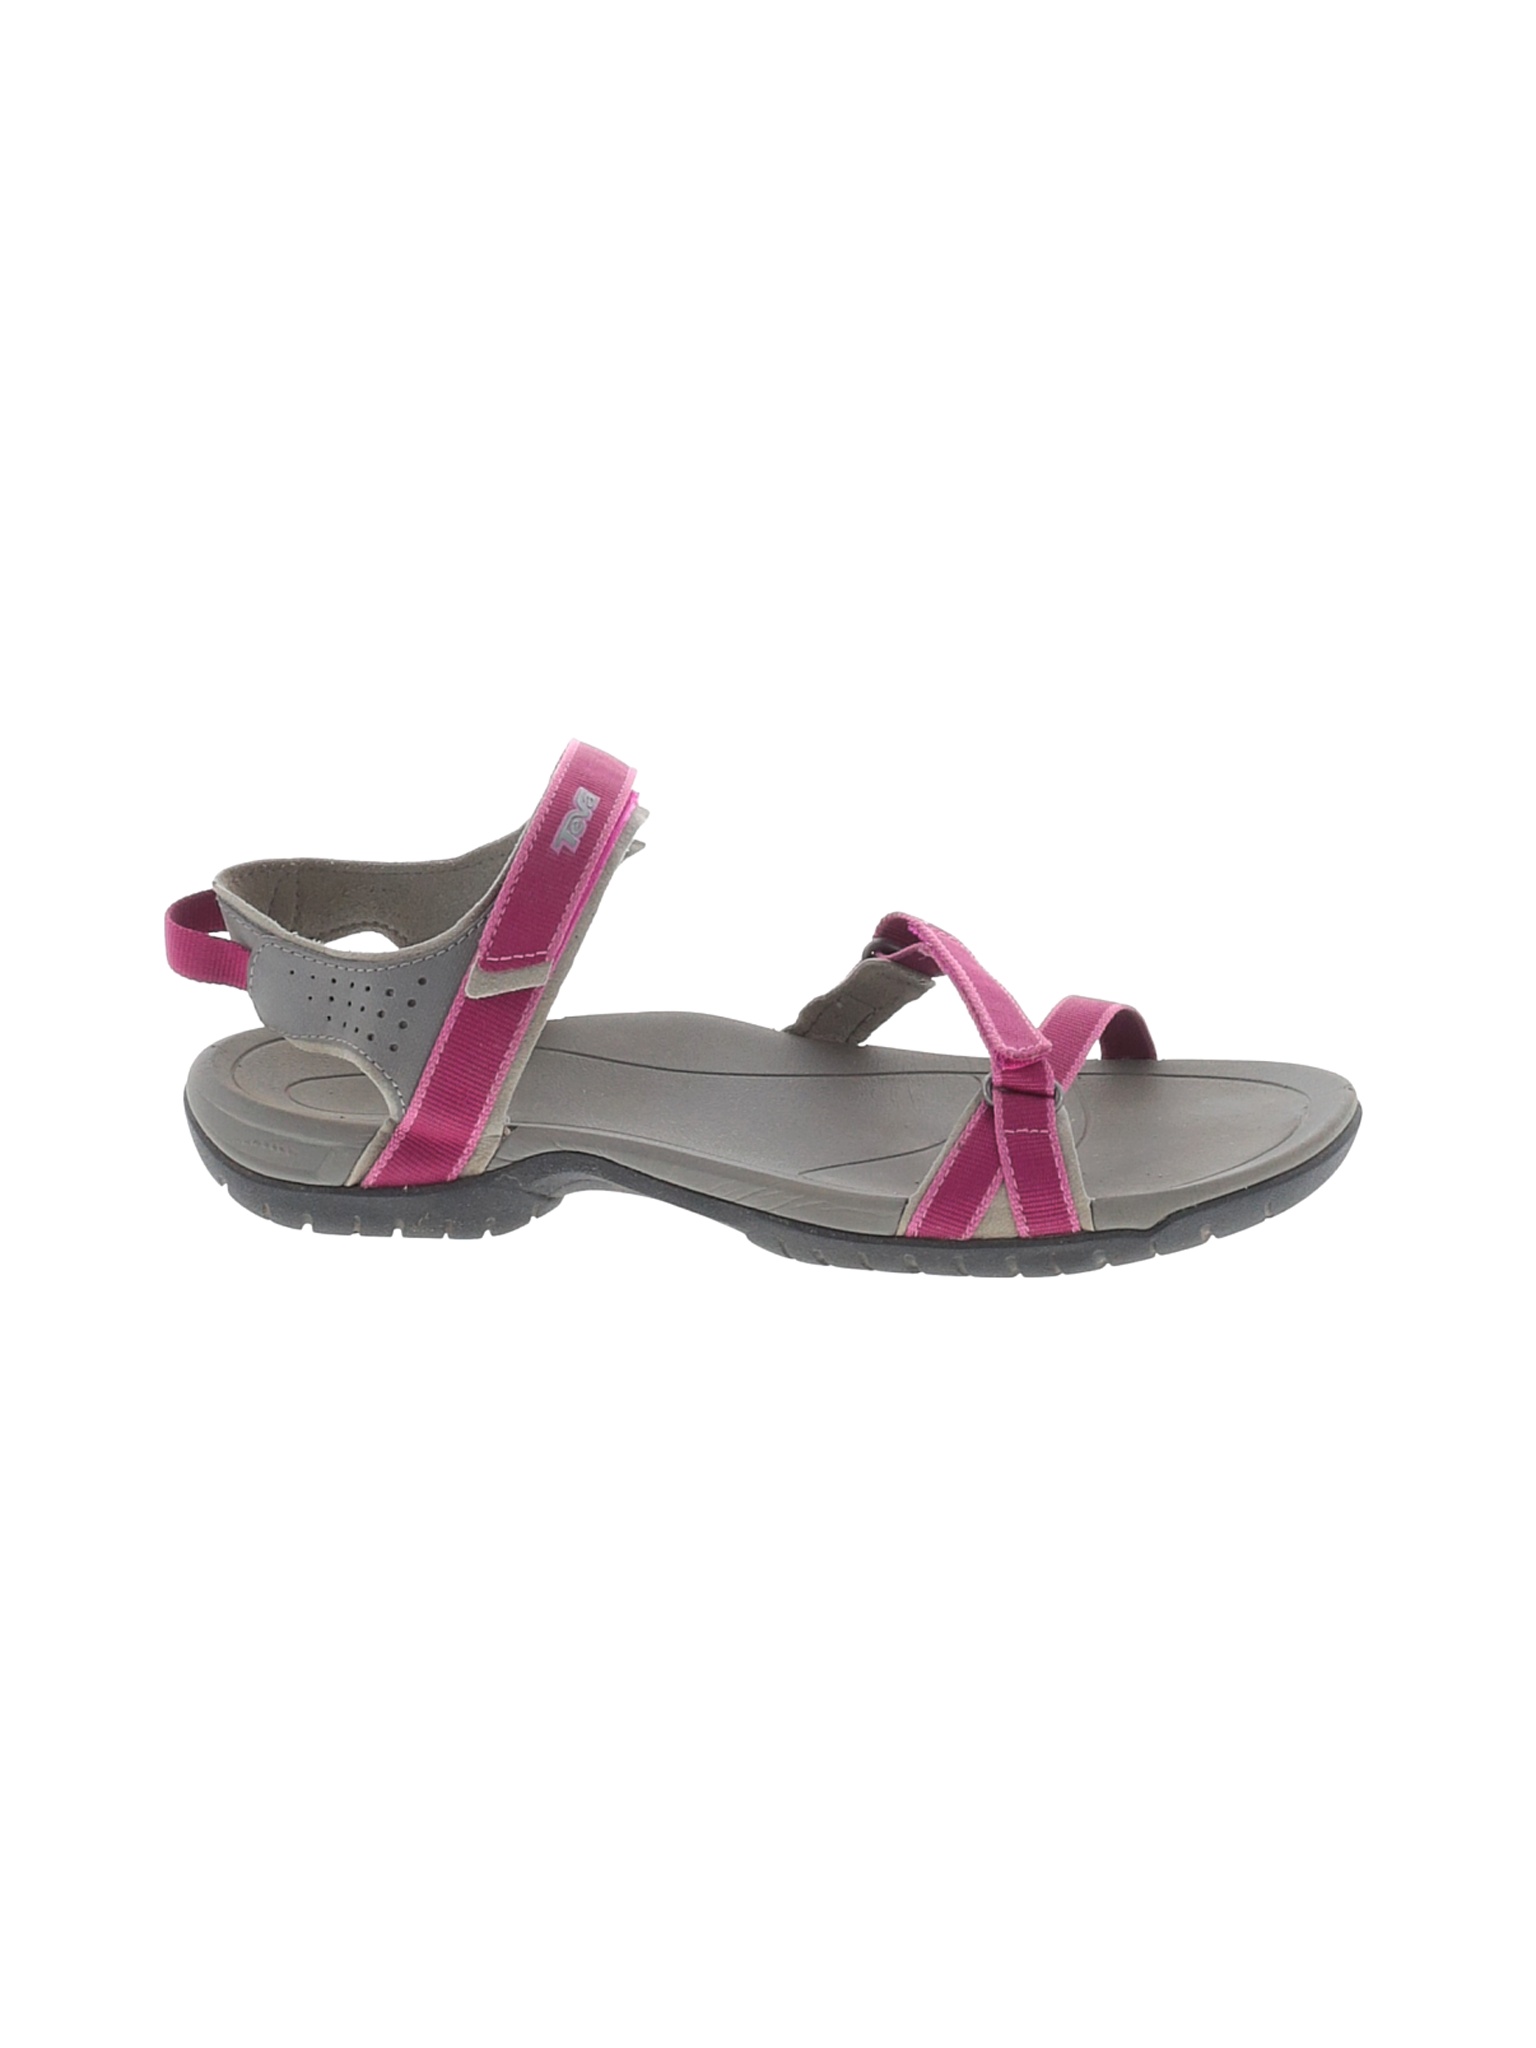 Teva Women Pink Sandals US 9.5 | eBay